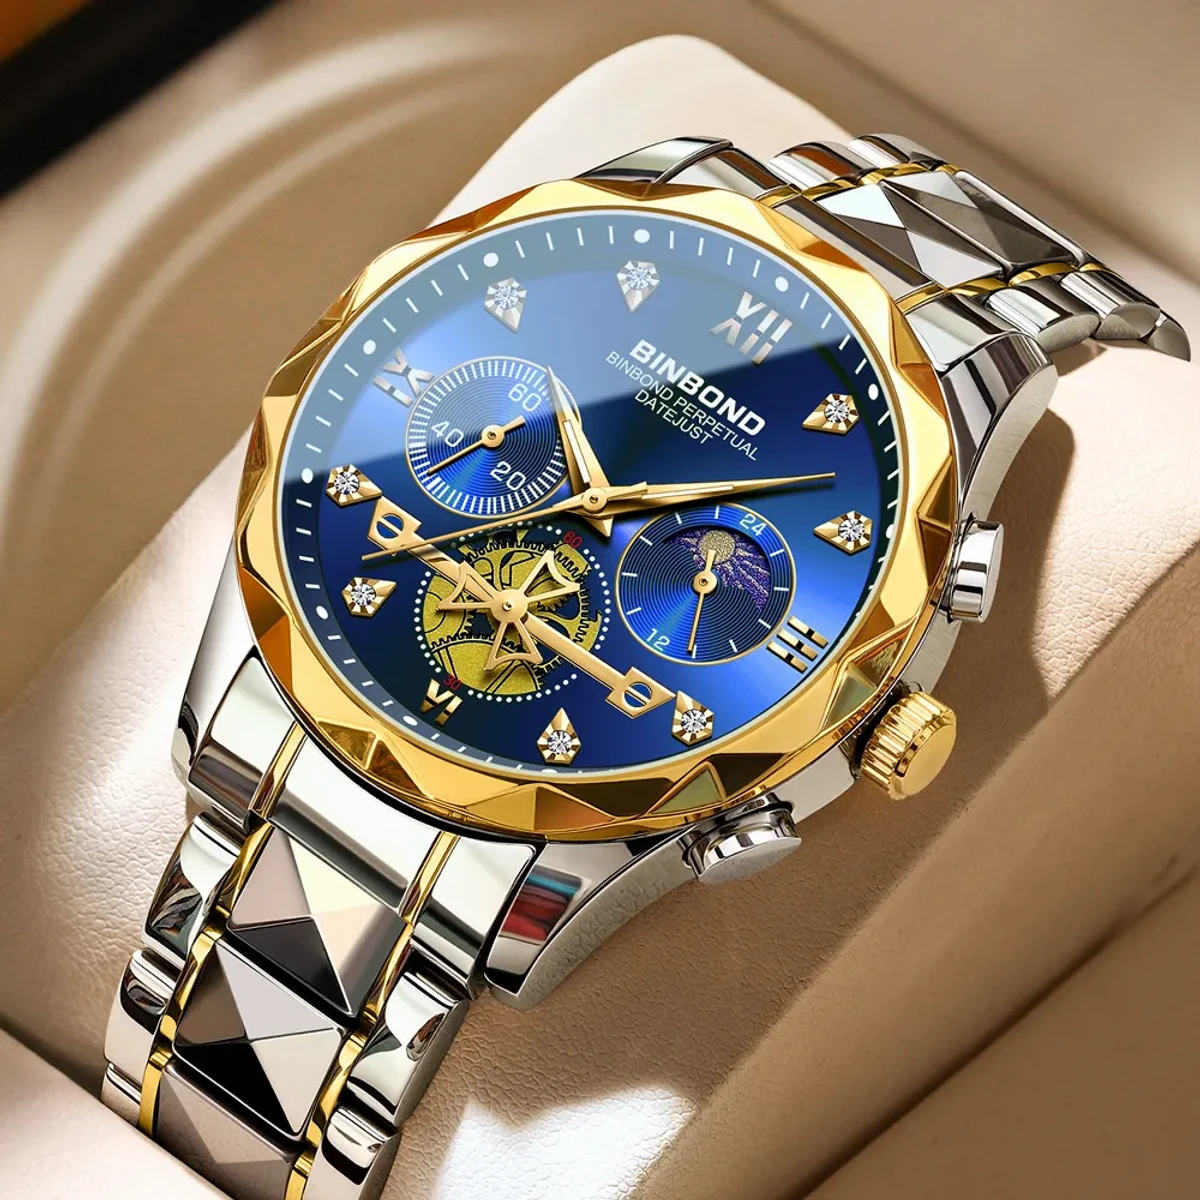 2023 New Luxury Binbond Brand Men's Luminous Watches Stainless Steel Waterproof - BINBOND Chronograph watch - Toton ar dial blue COOLER FOR MAN